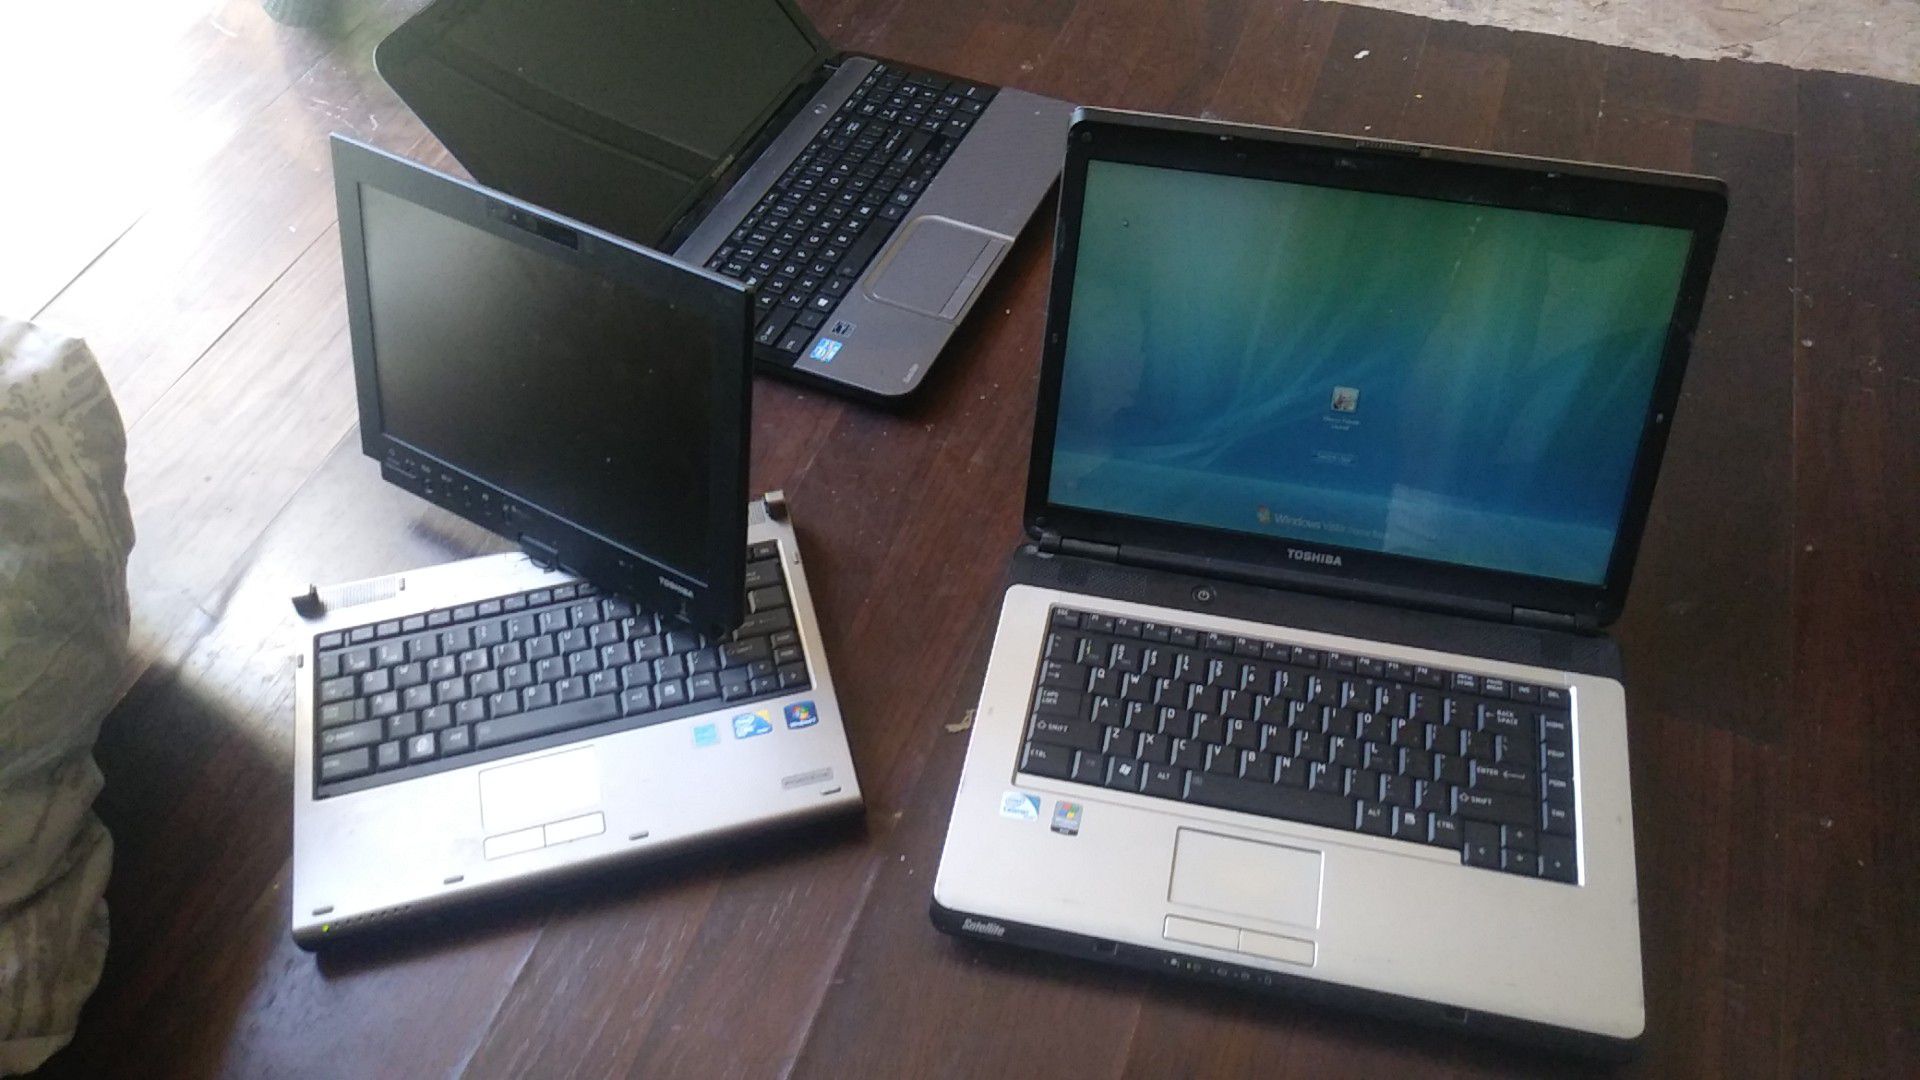 Toshiba laptops $100 for all three